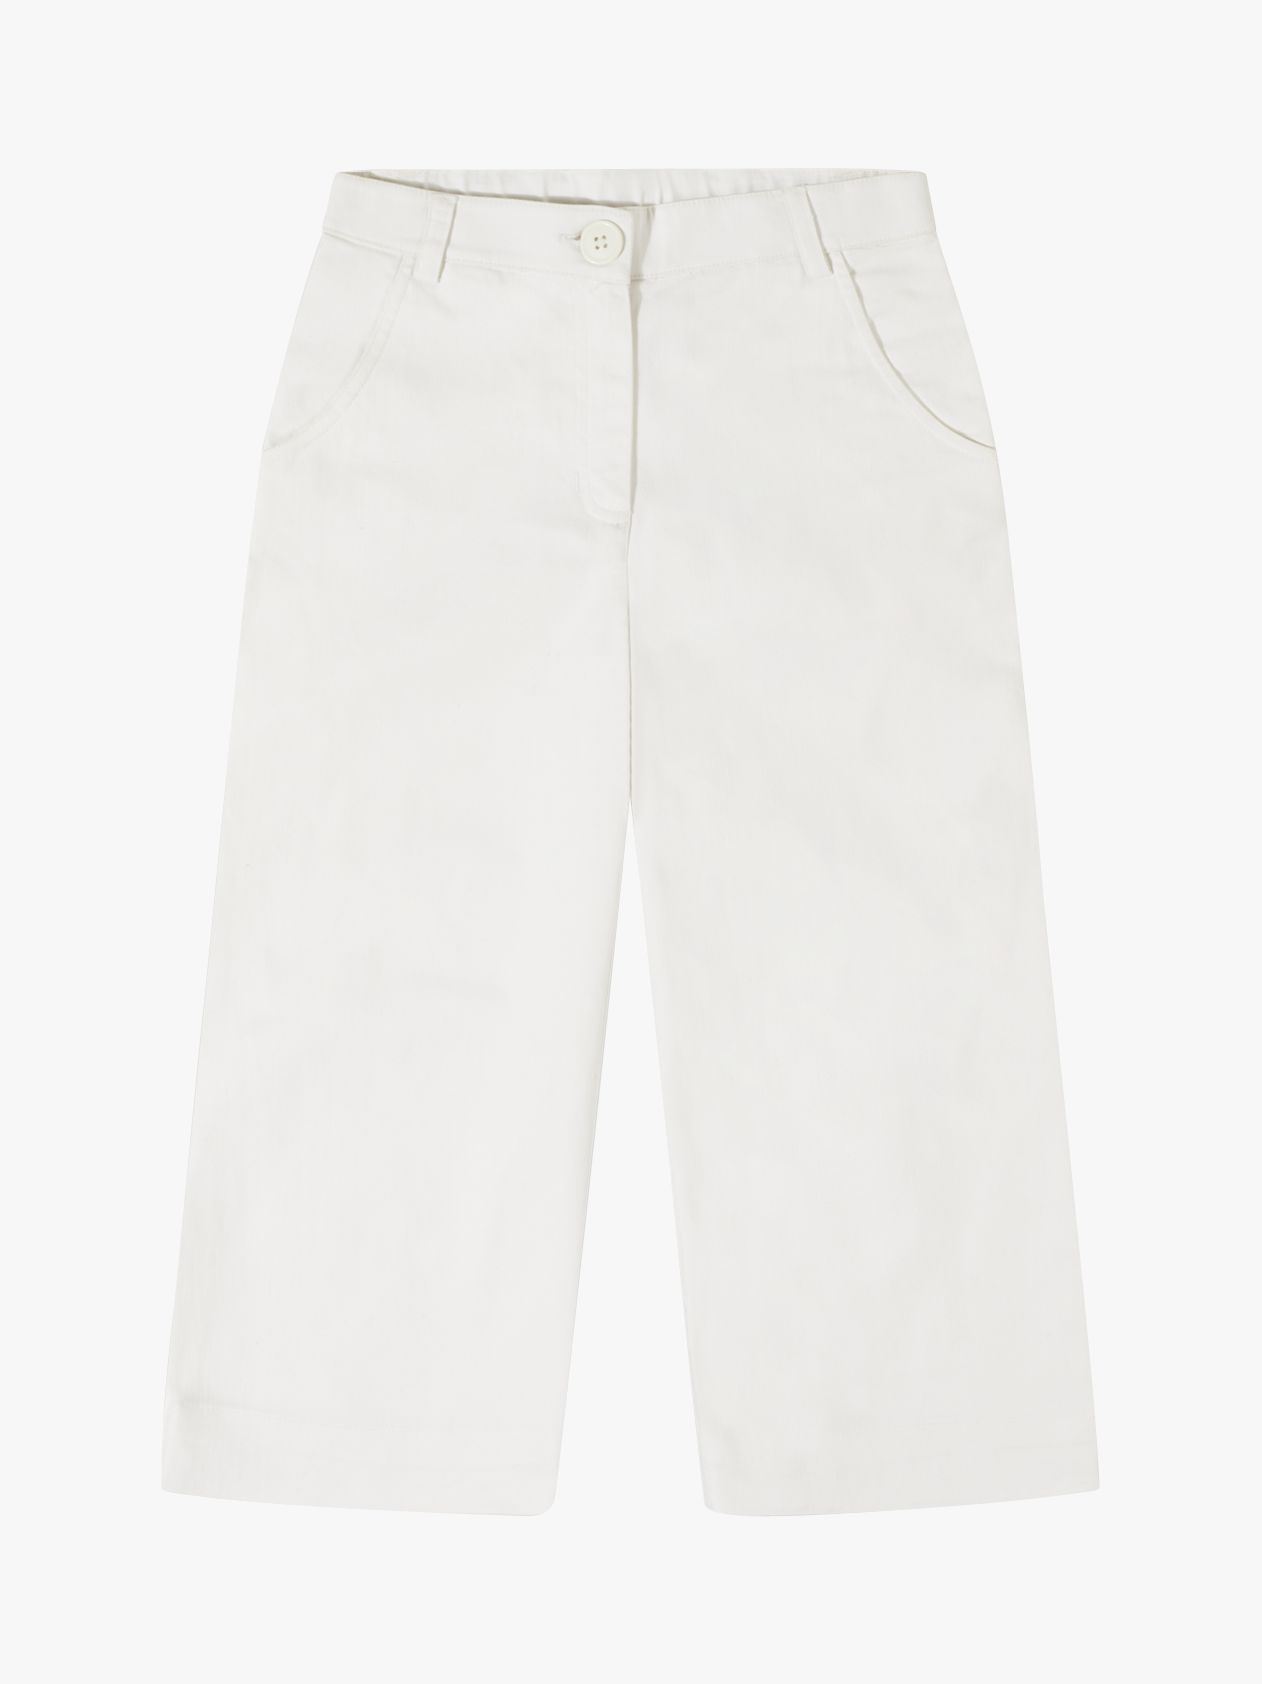 Jigsaw Girls' Mini Hoxton Jeans, White